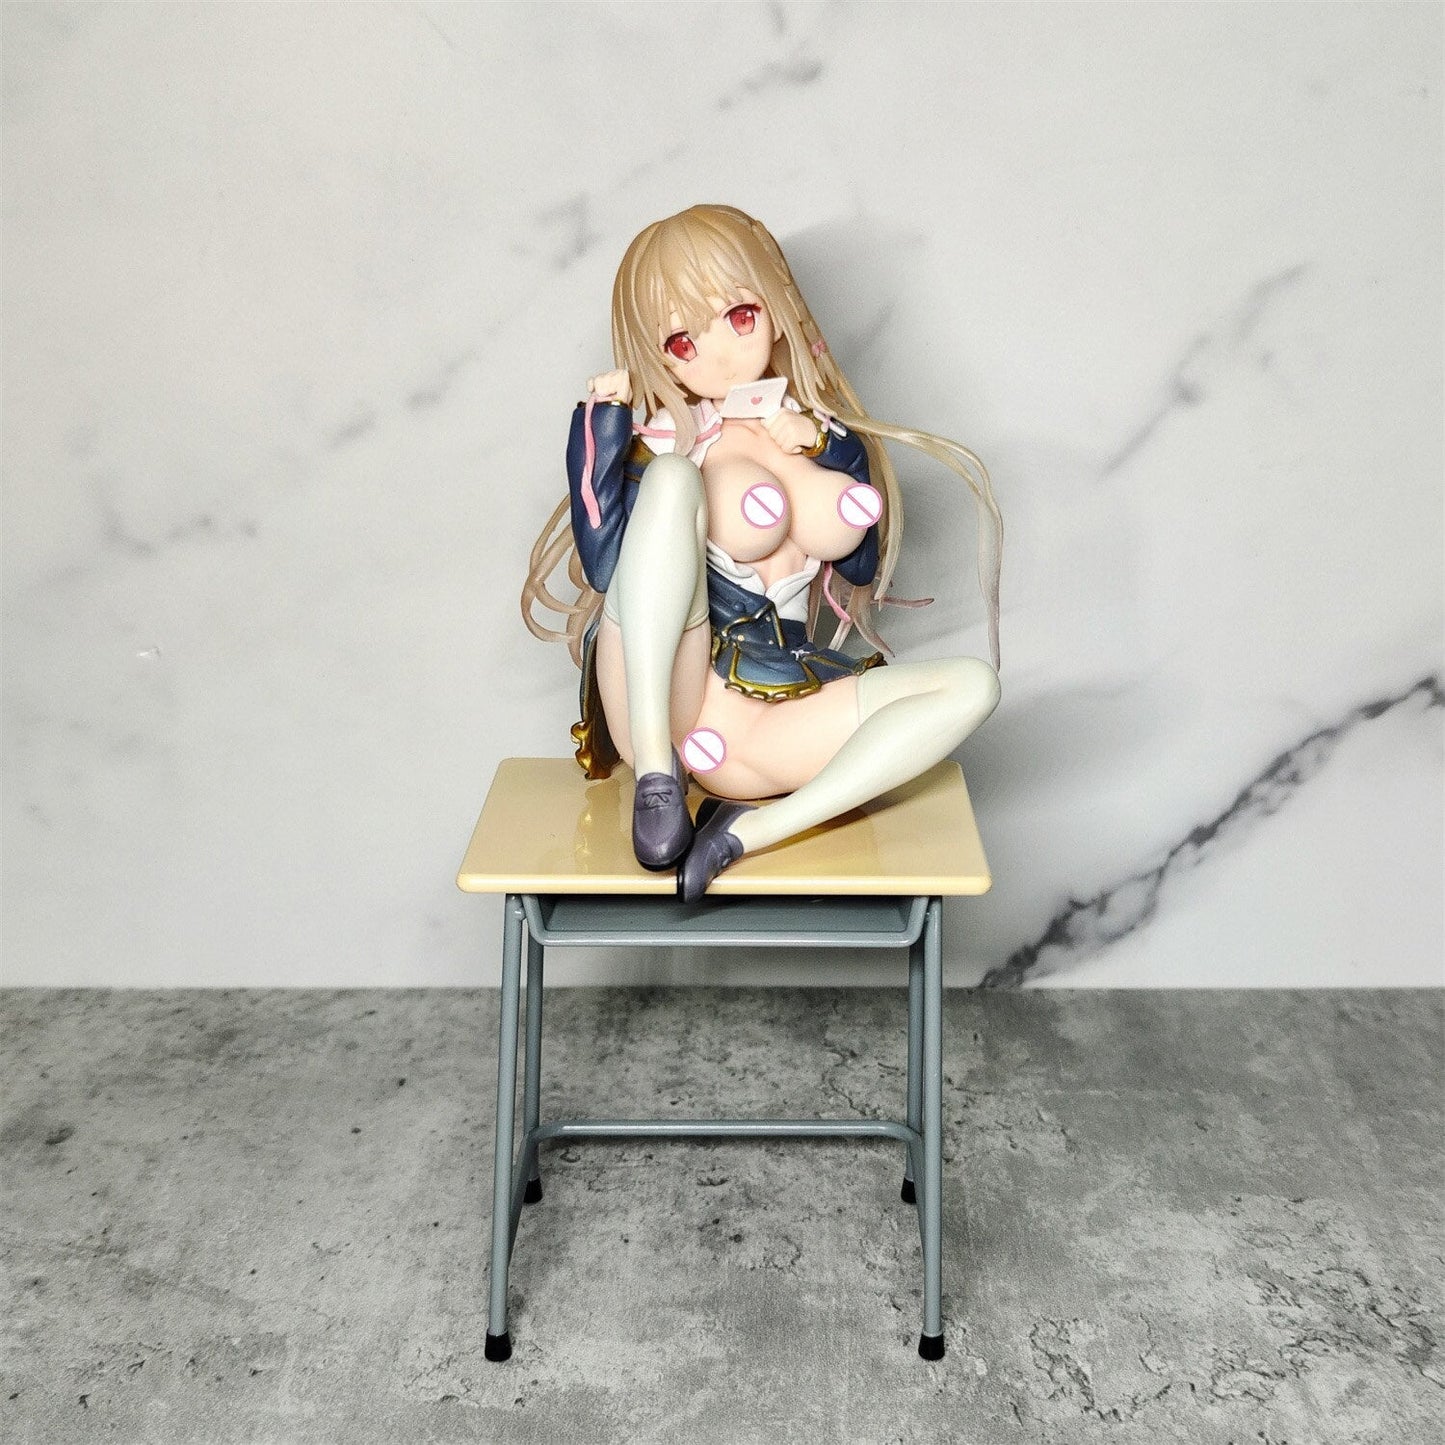 20cm AmiAmi Teacher Teacher Maeda Shiori PVC Action Figure Japanese Anime Cute Girl Adult Toy Collection Model Dolls